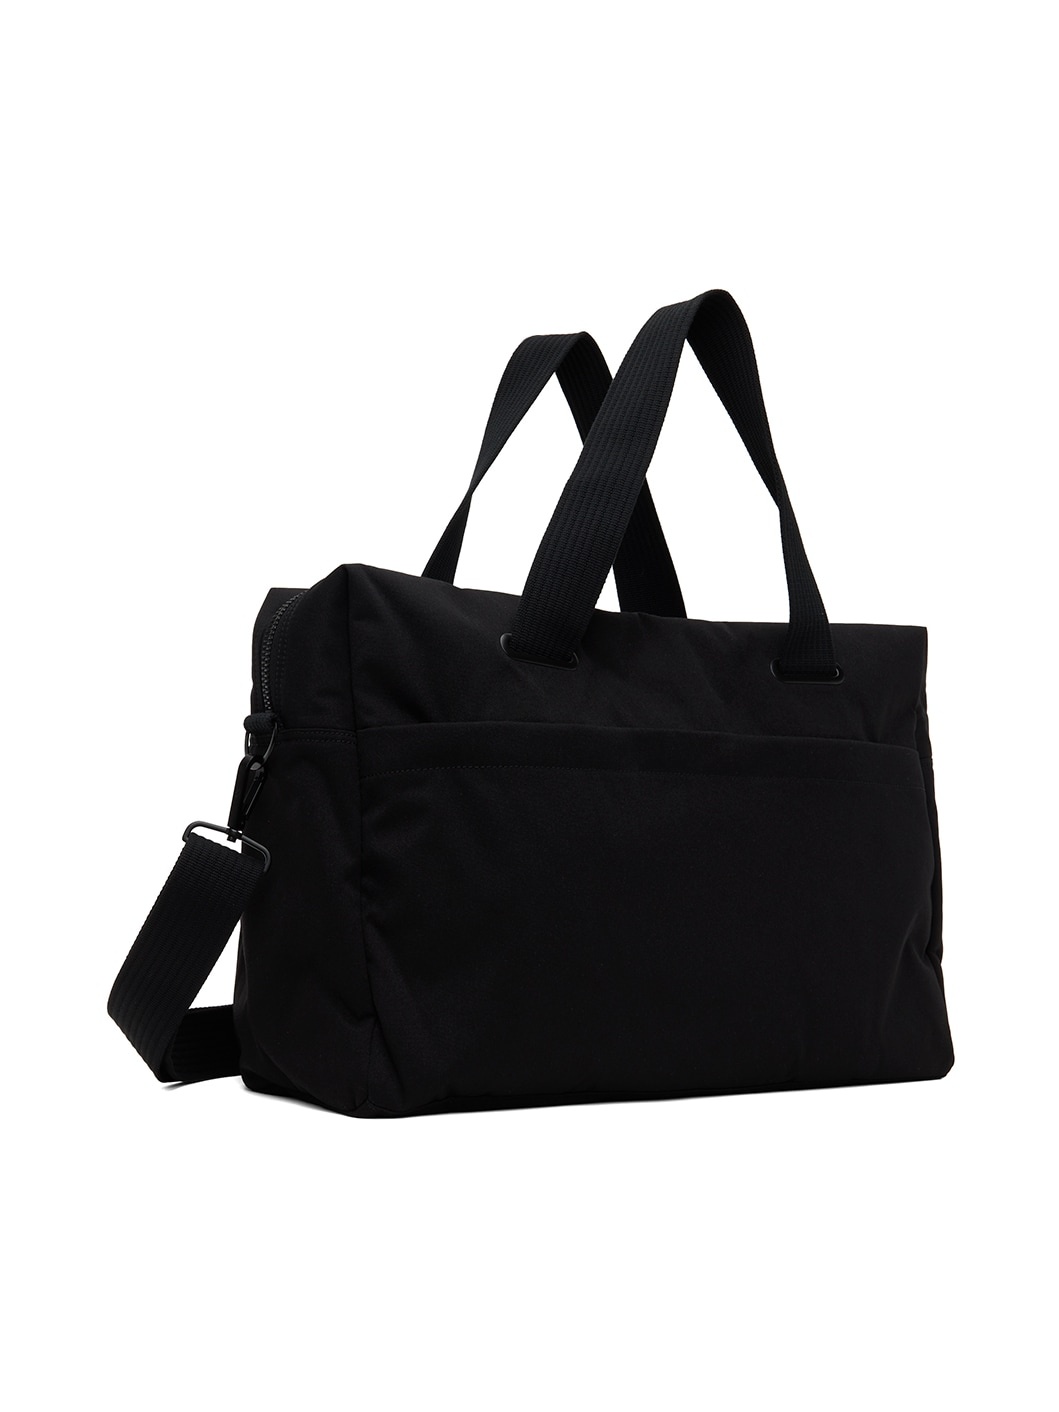 Black Travel Duffle Bag - 3